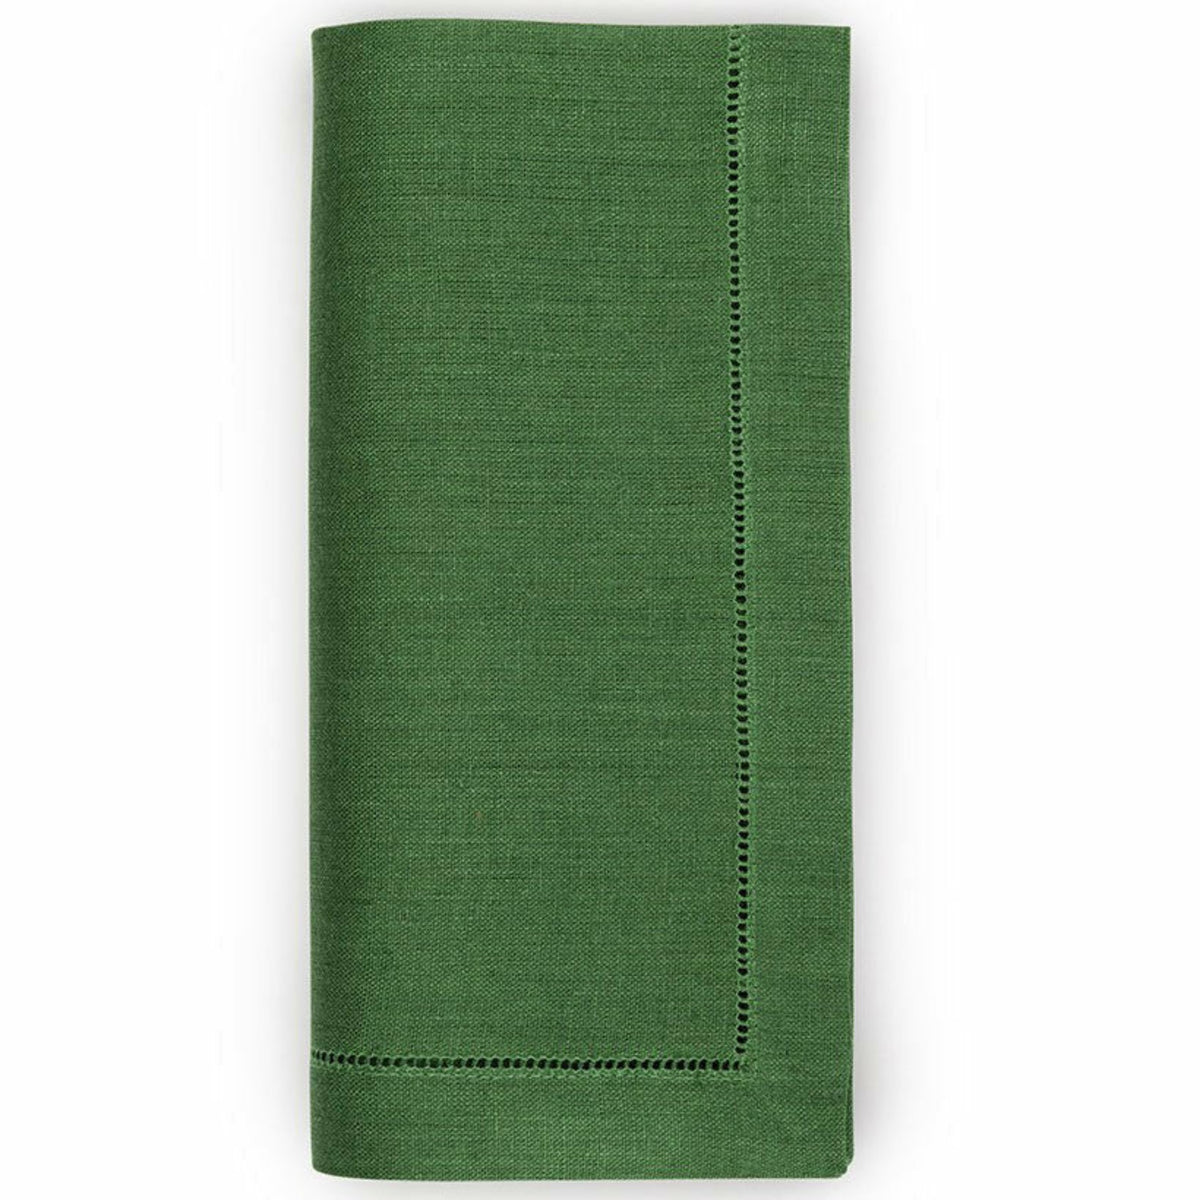 MOSS GREEN Linen Napkin Set: 2, 4, 6, 8, 10, 12 Napkins. Olive Green  Heavier Weight Linen Napkin Set. Military Green Linen Napkins. 